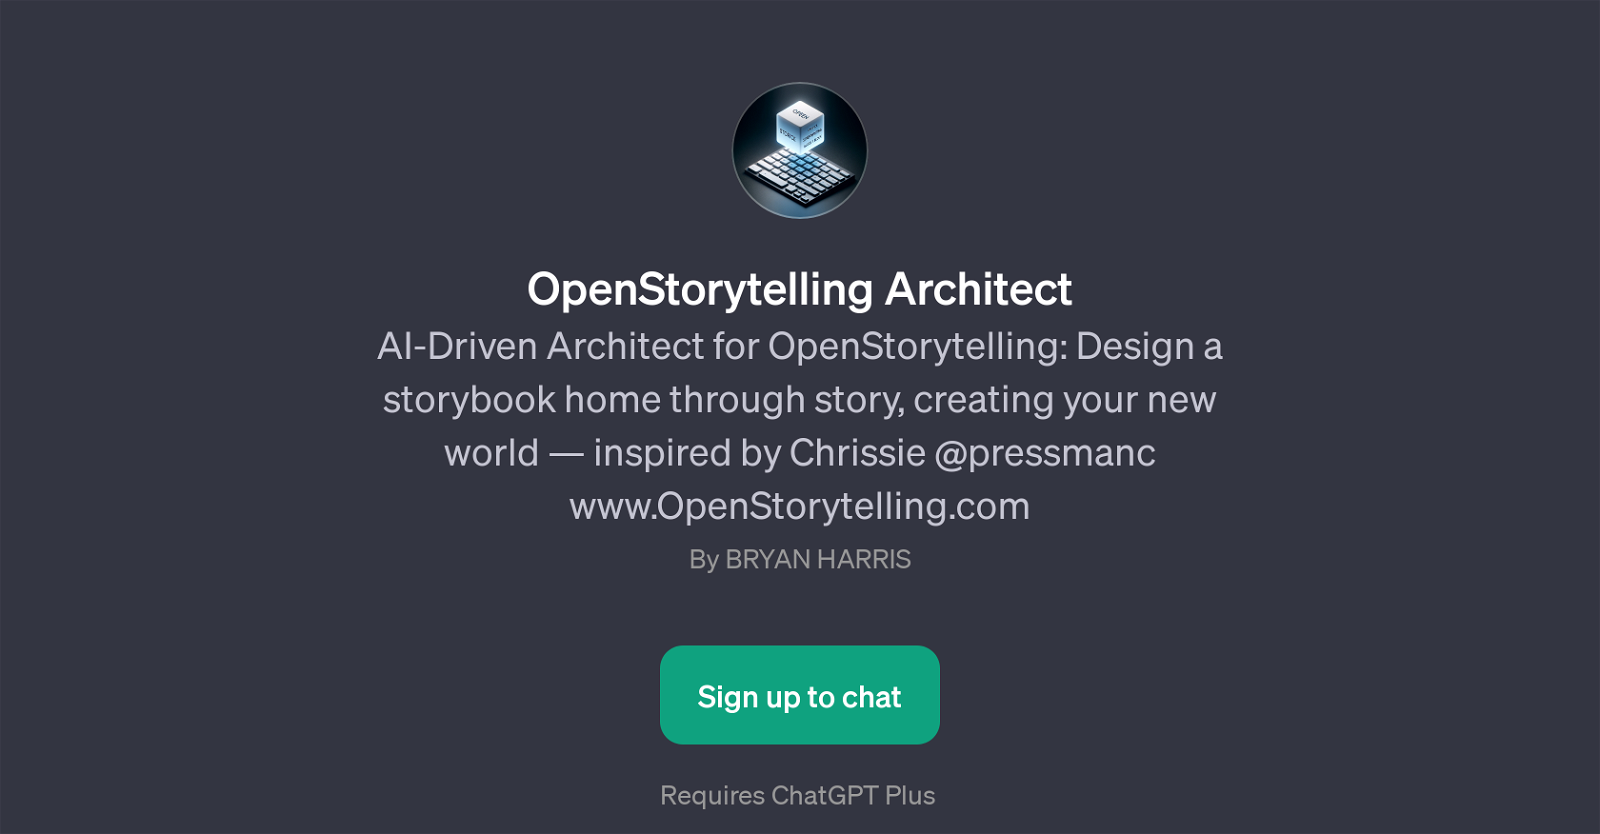 OpenStorytelling Architect website